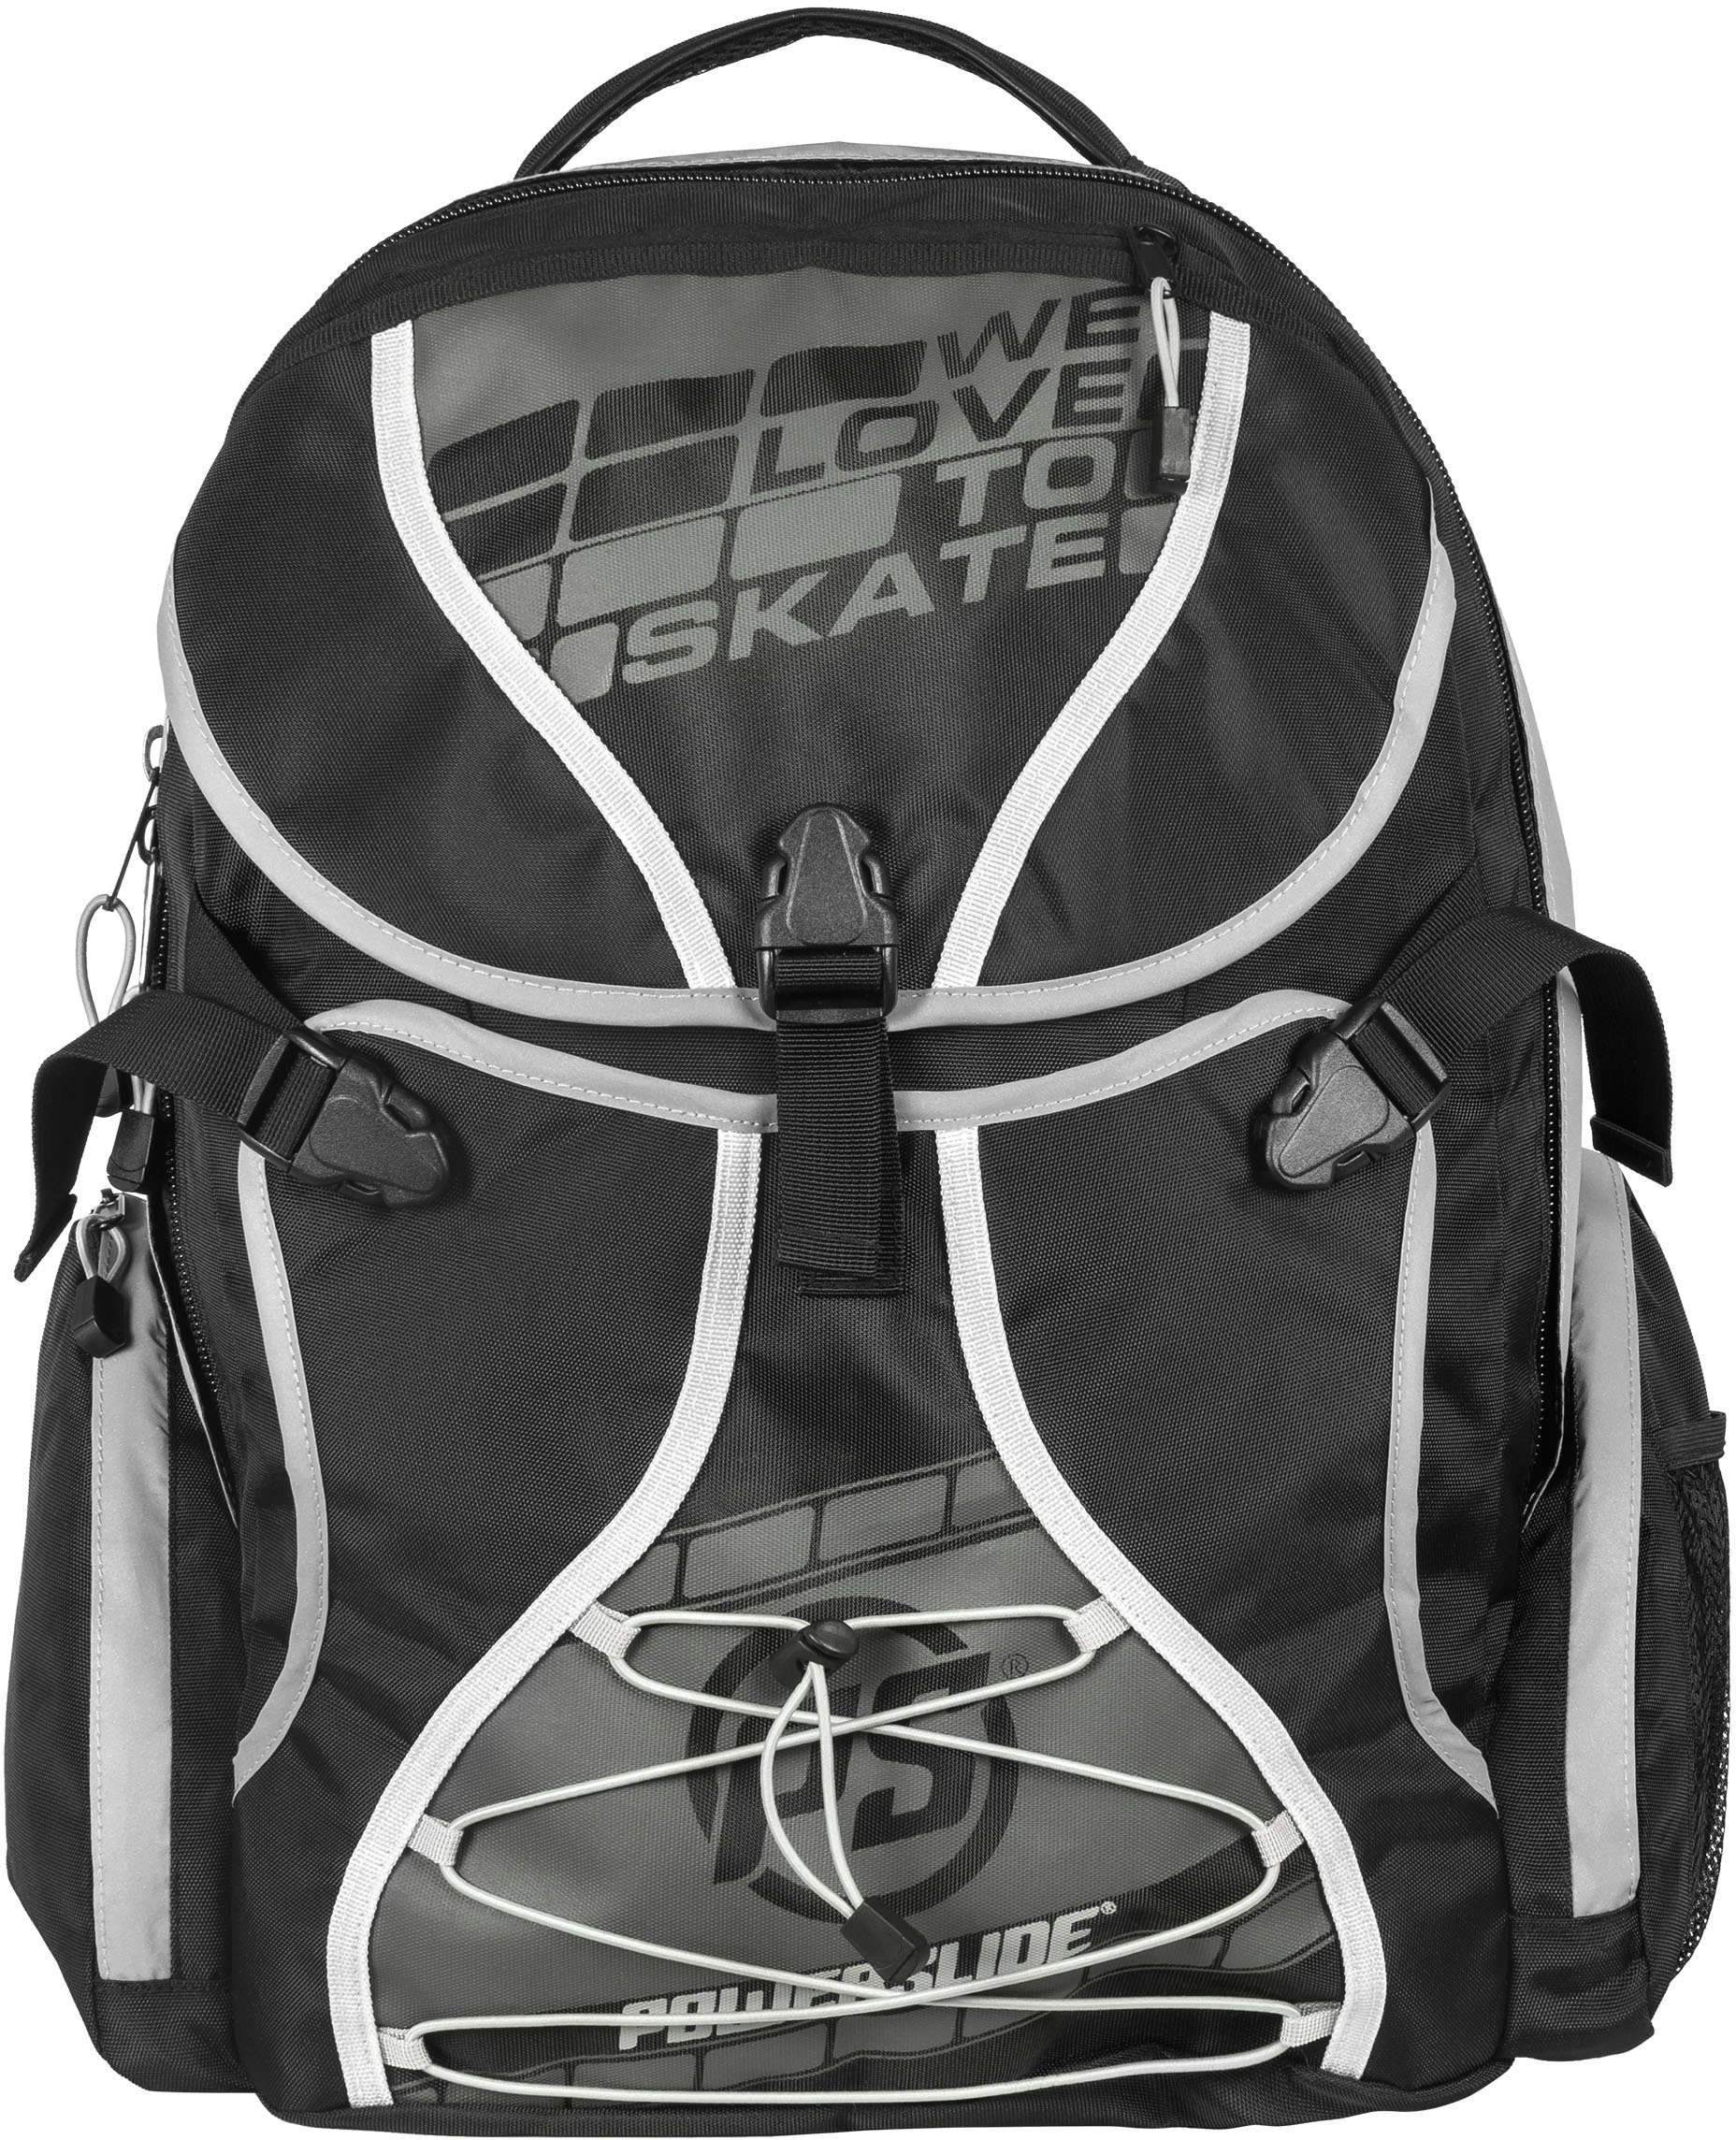 Powerslide Sportrucksack Backpack Sports